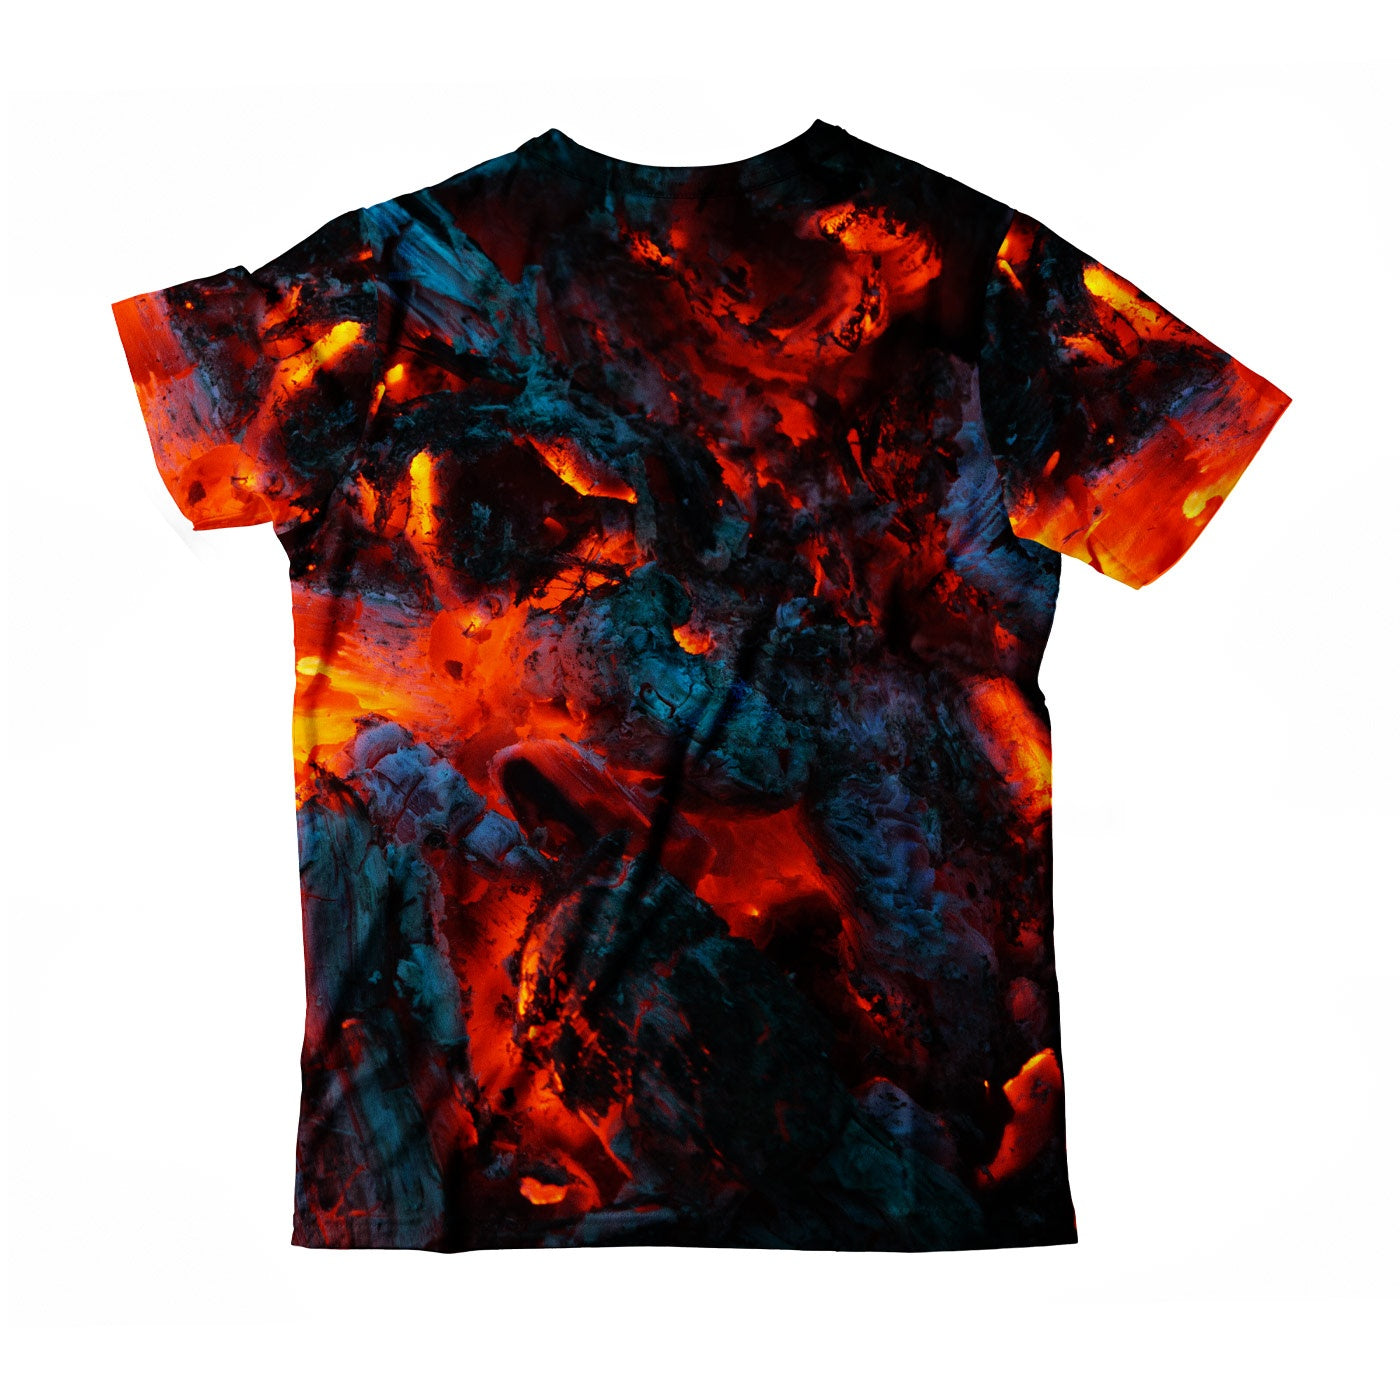 After The Fire T-Shirt